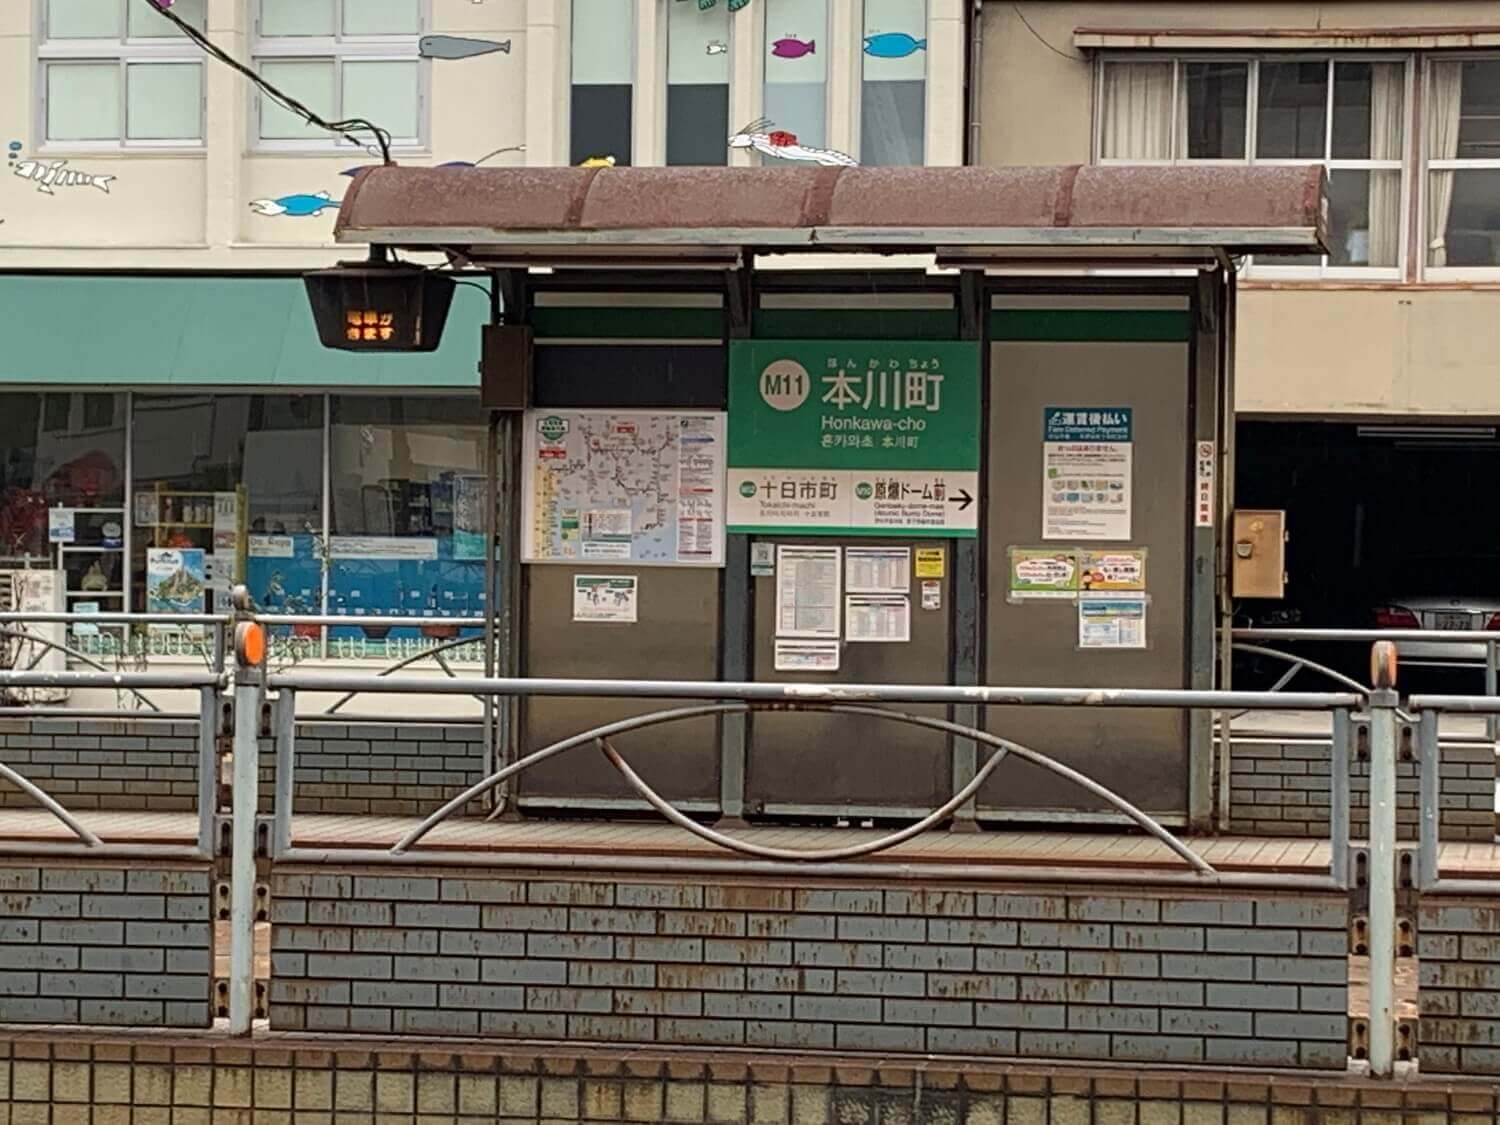 Honkawacho train stop on Hiroshima Electric Railway city line